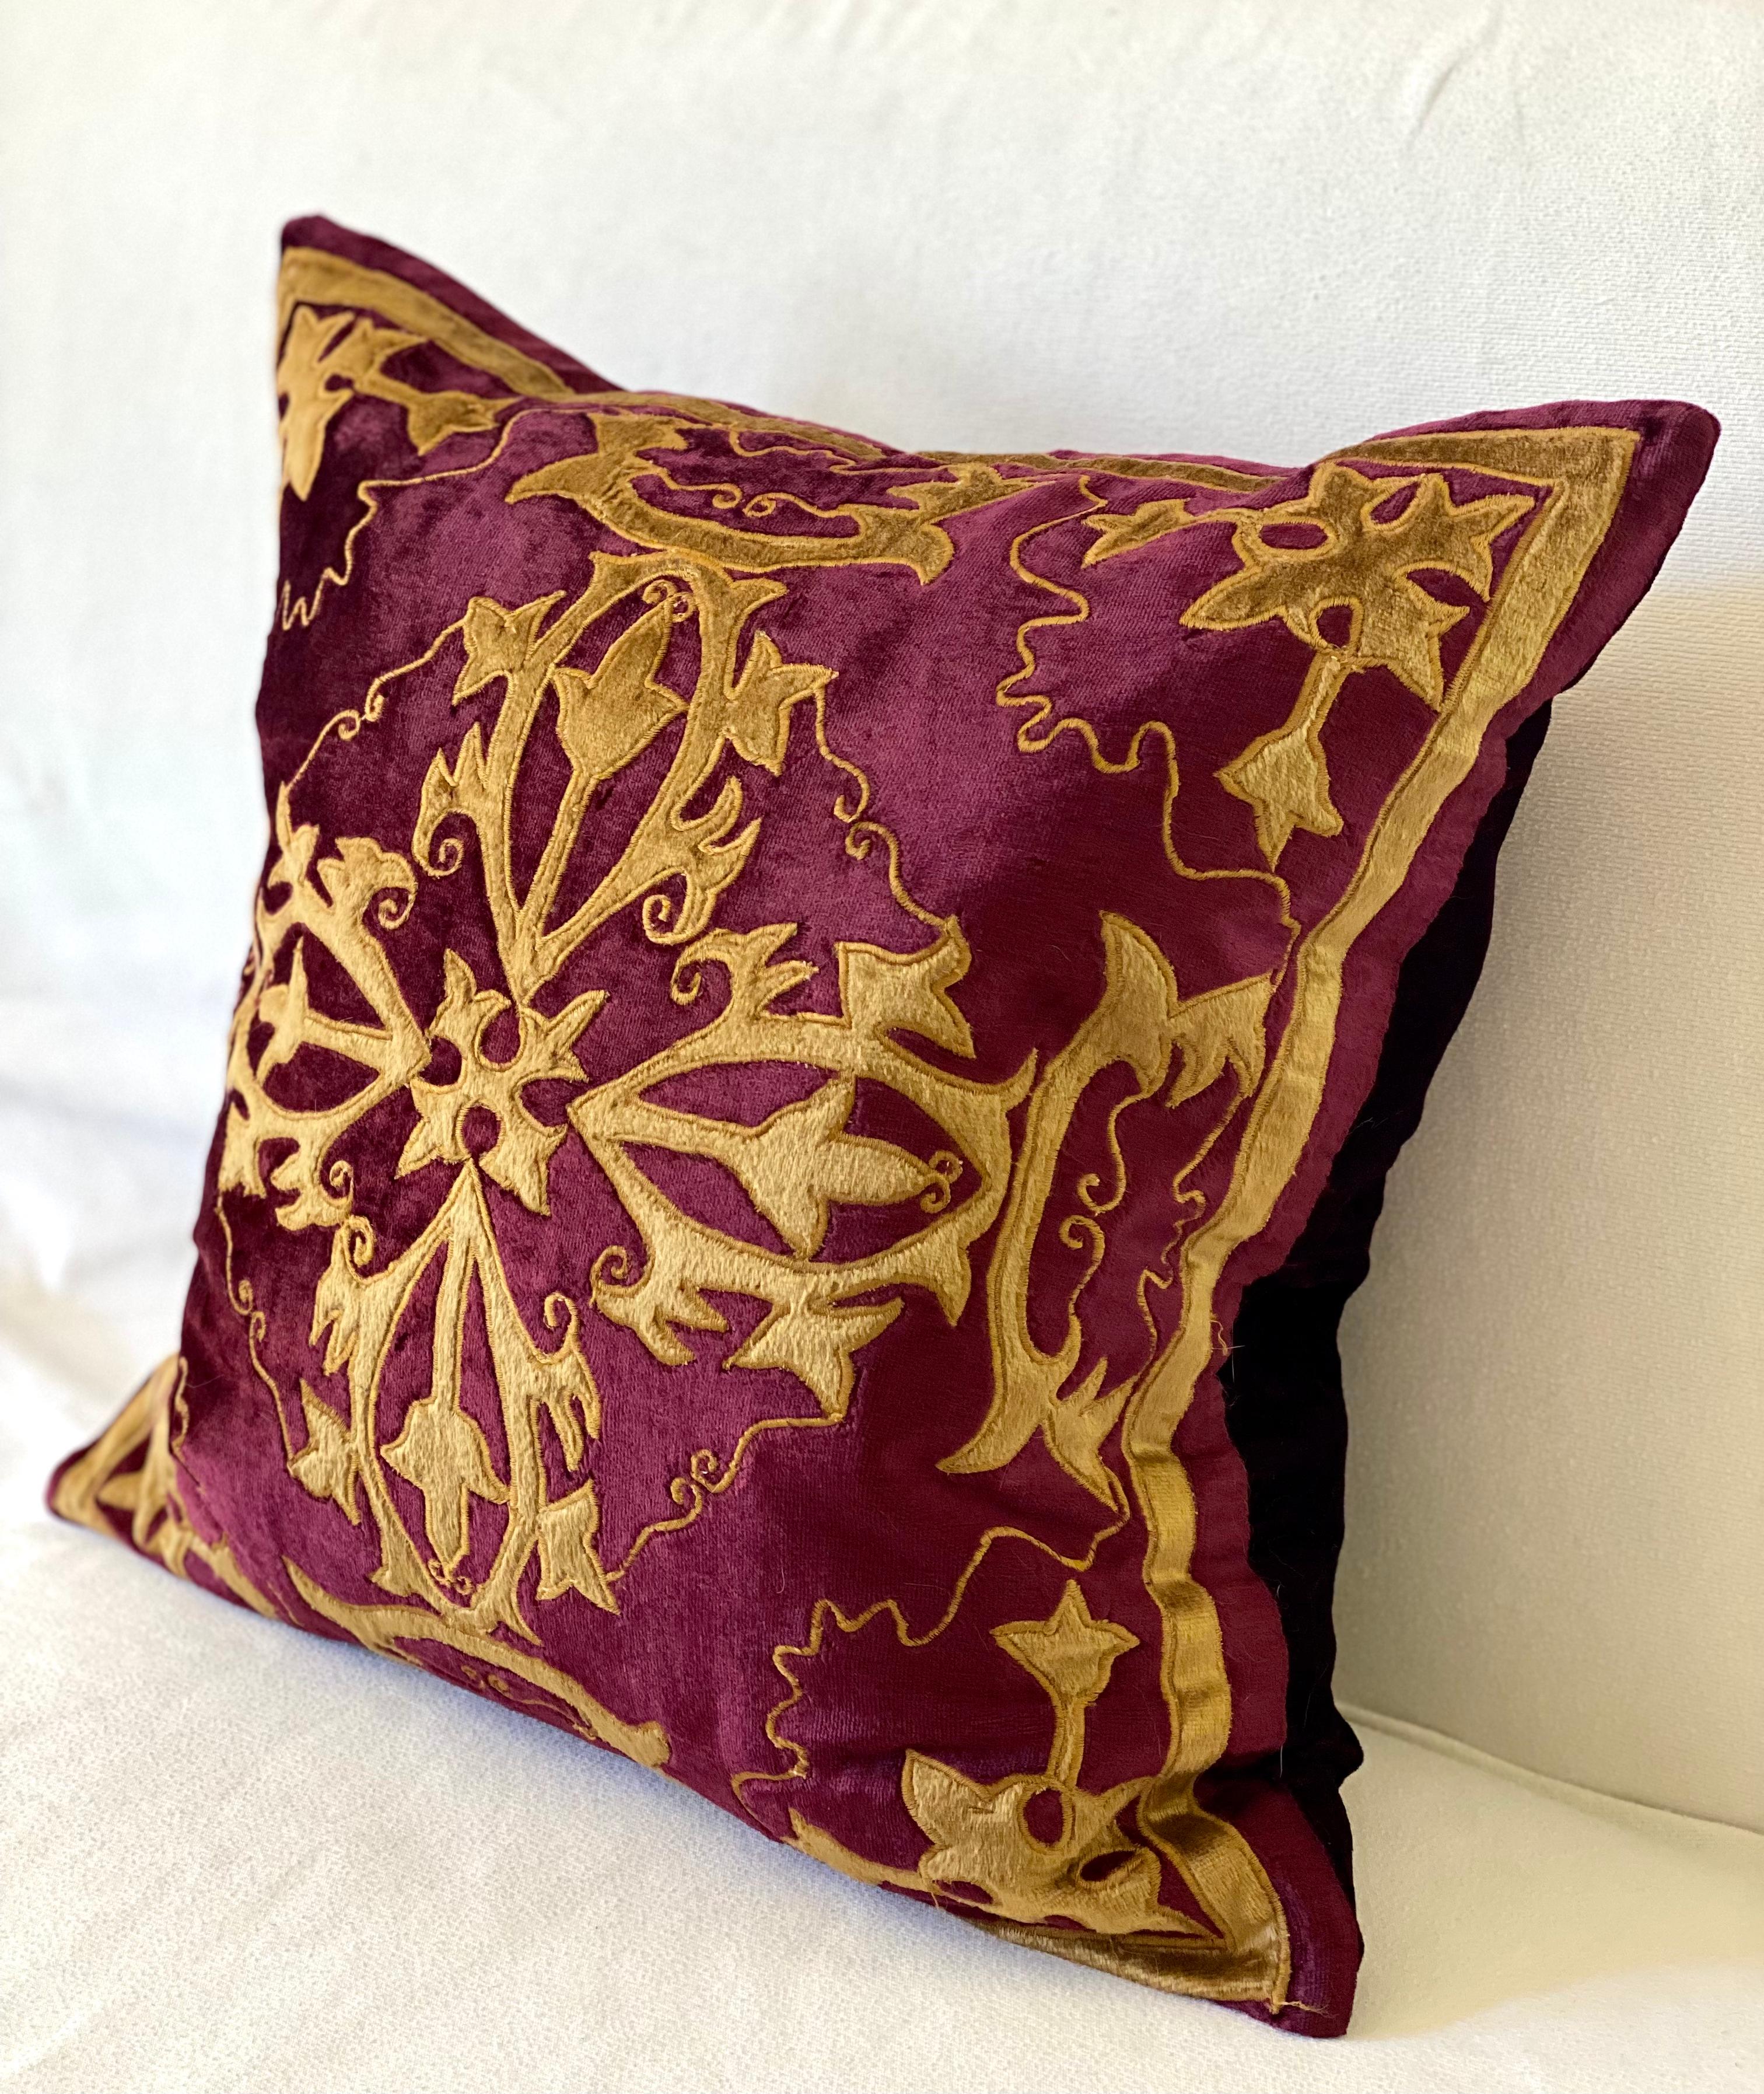 Appliqué Baroque Style, Red and Gold Velvet Pillow, Elaborate Applique Work